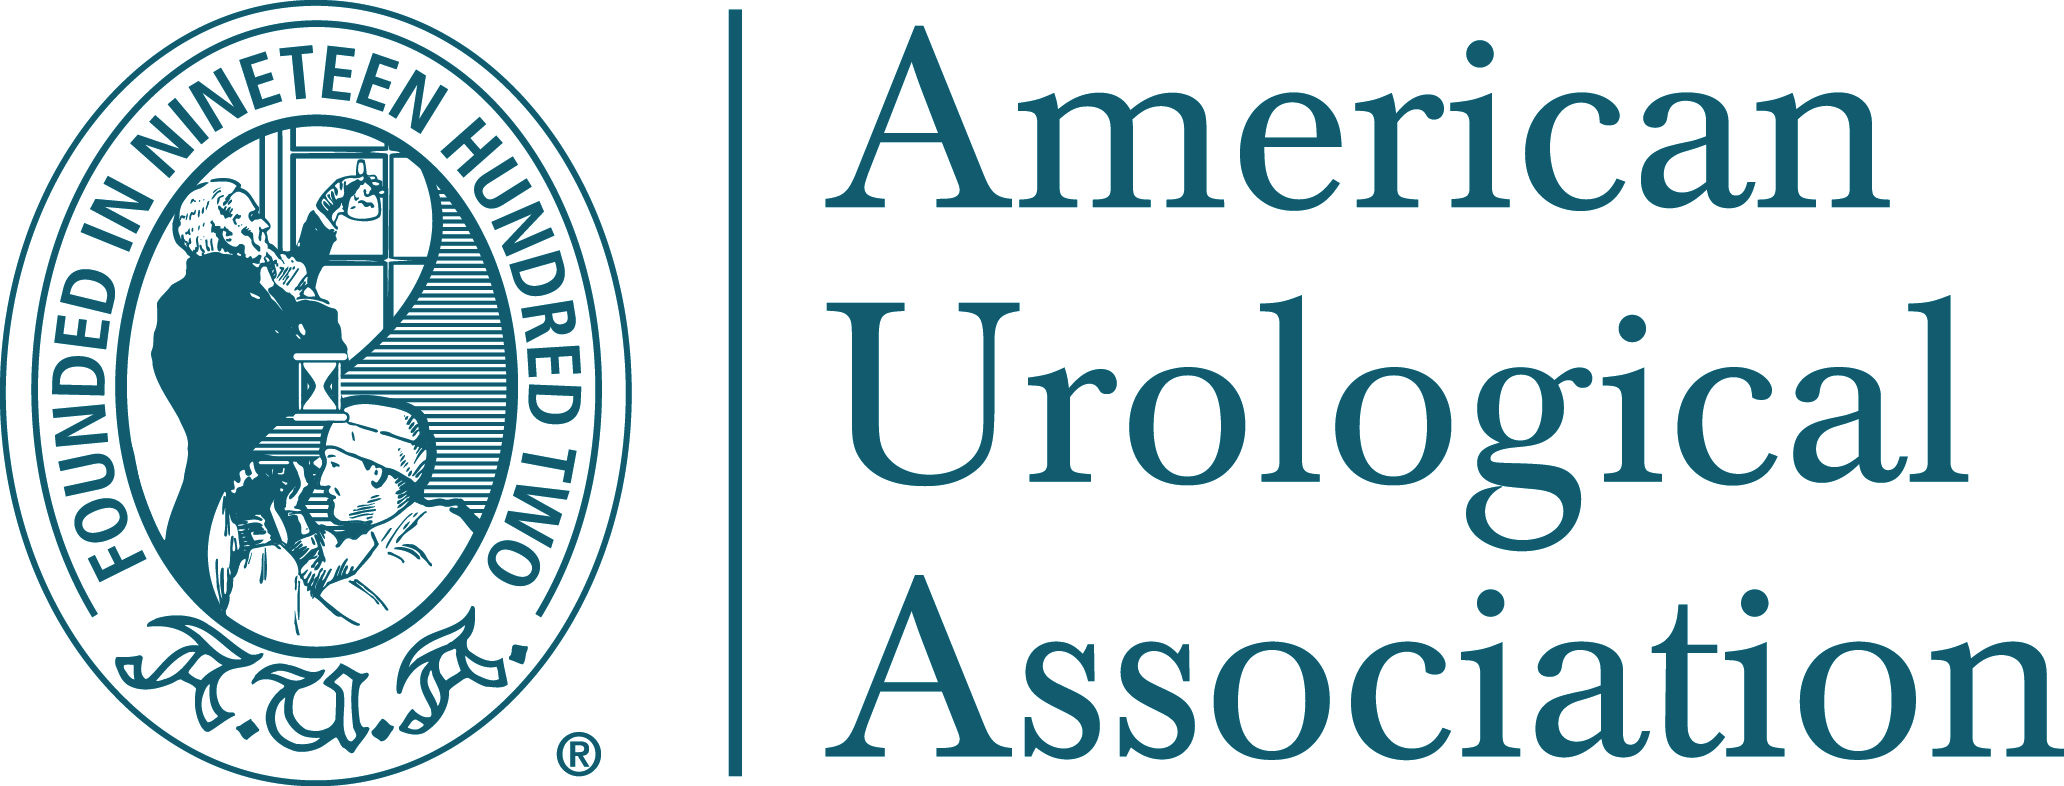 AUA 2021 - American Urological Association Annual Meeting